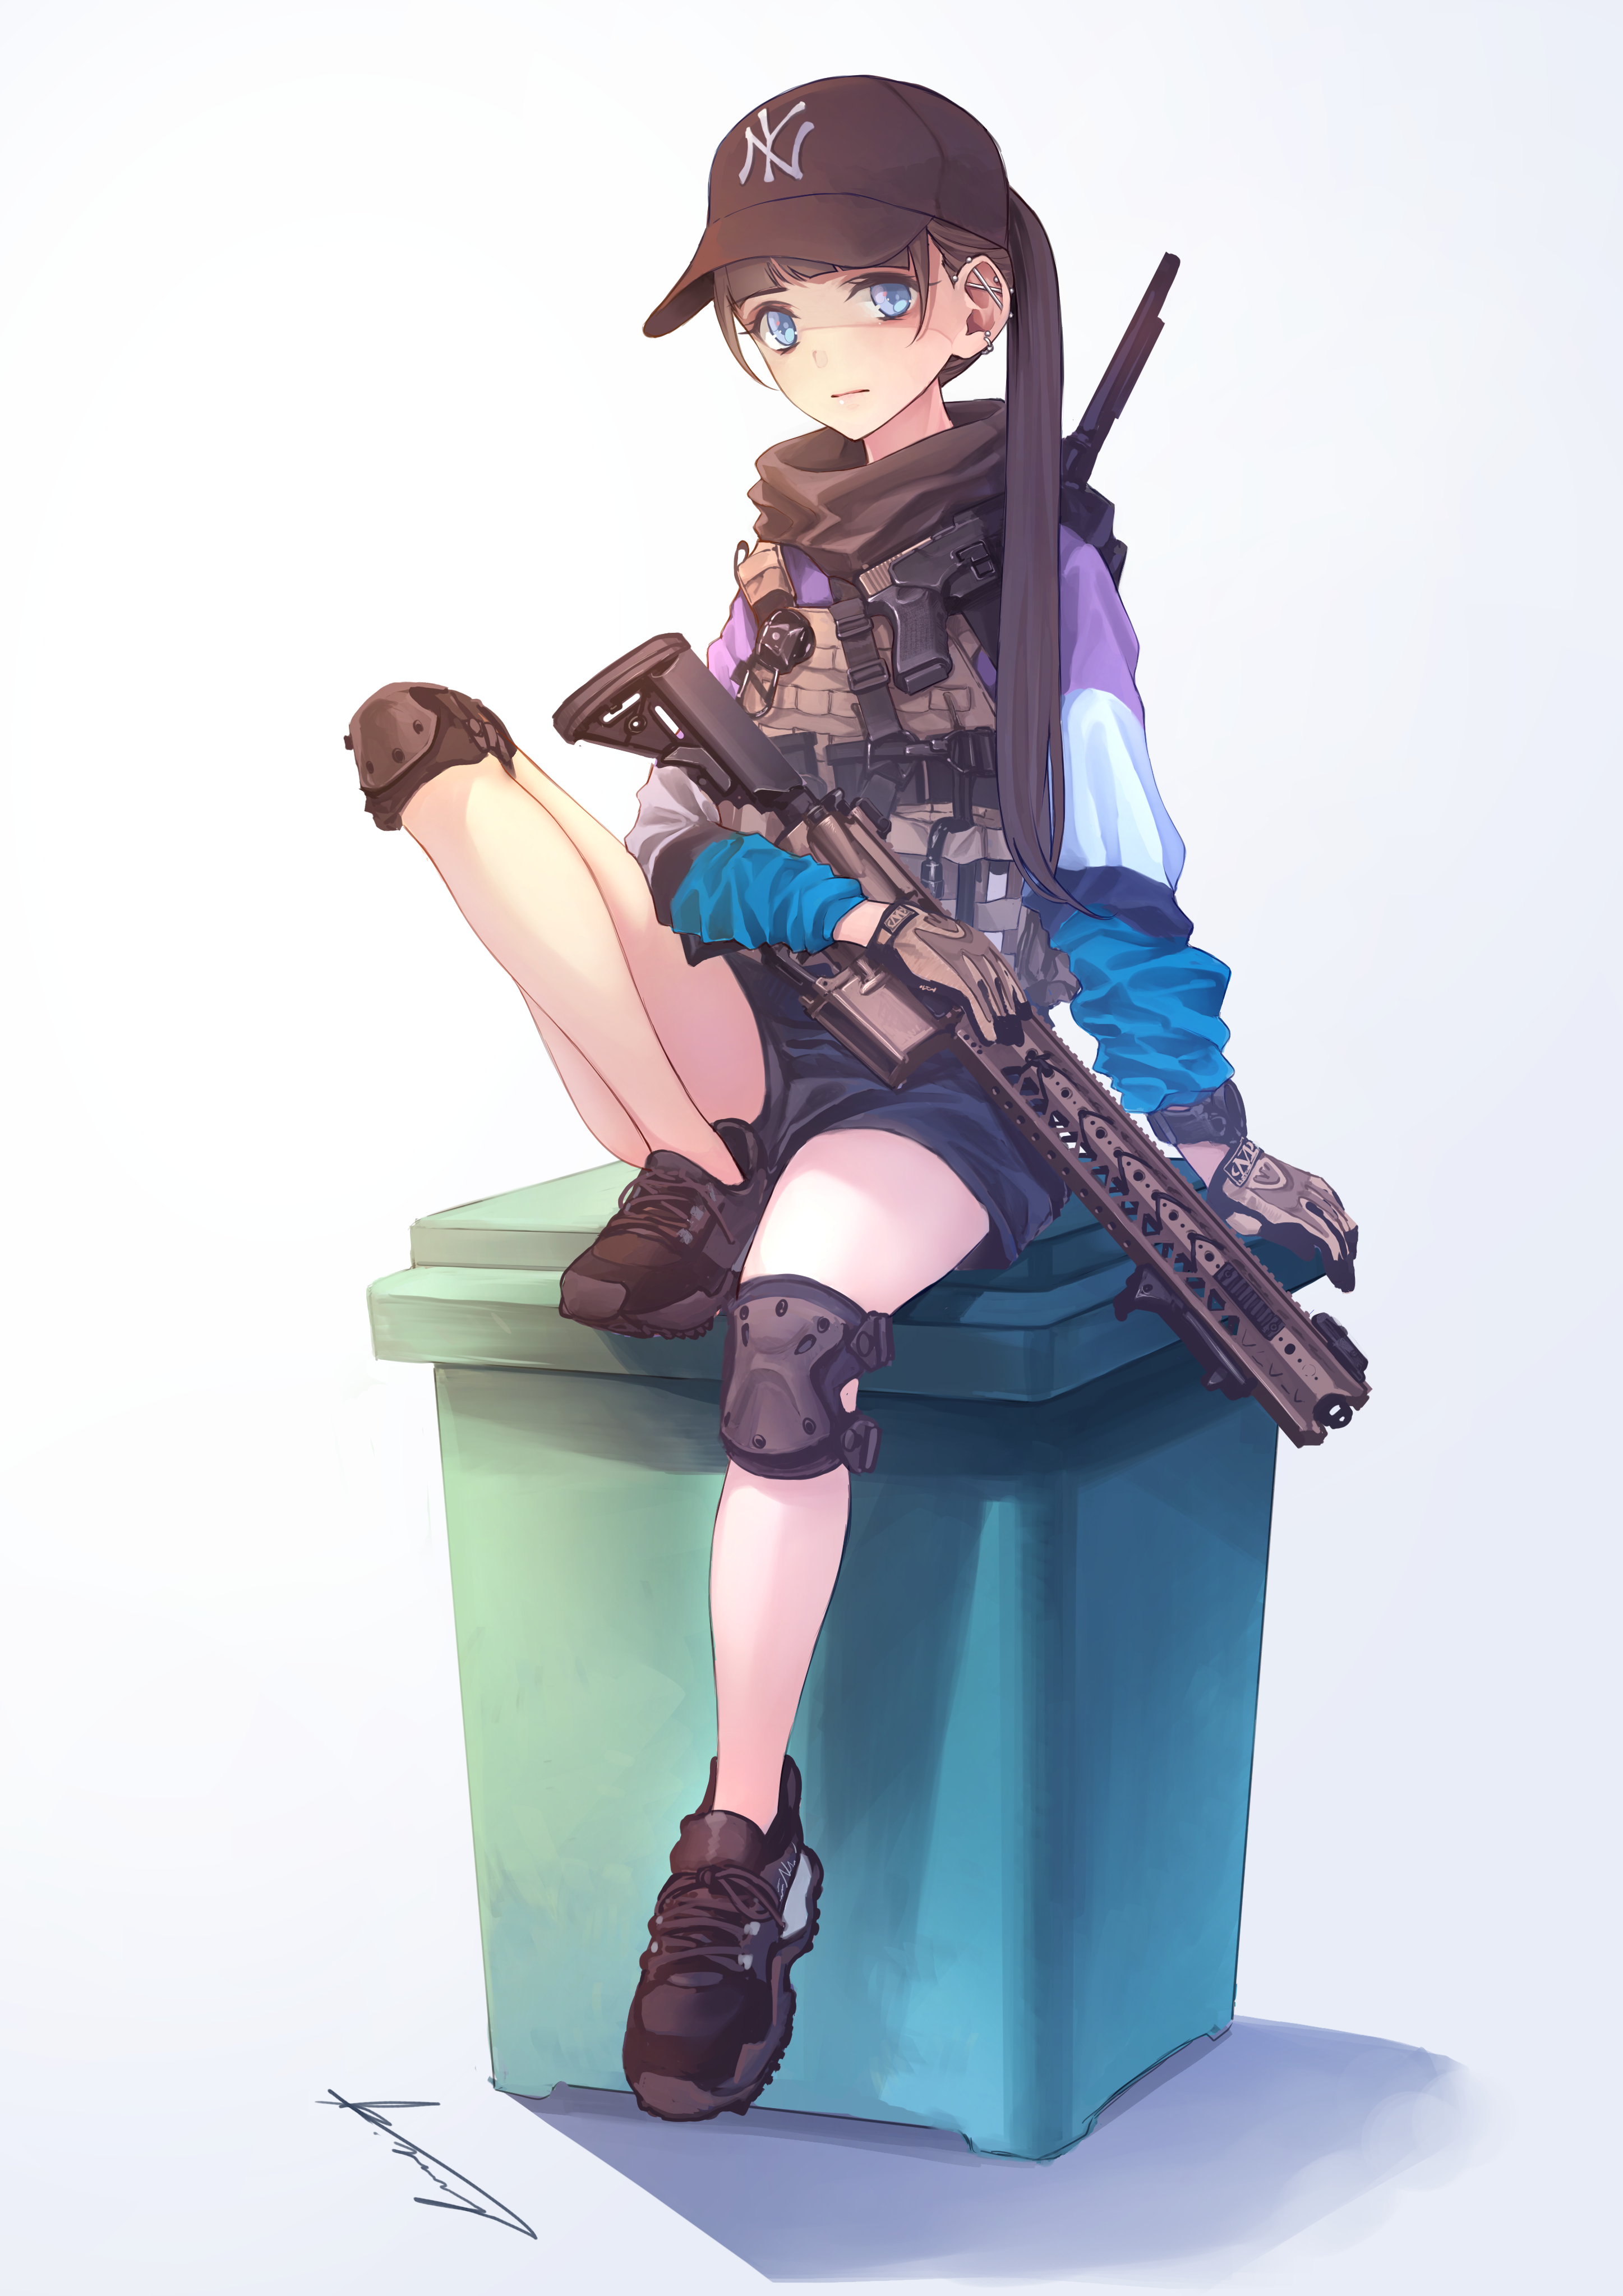 Anime 2894x4093 anime anime girls digital art artwork 2D portrait display girls with guns anime girls with guns